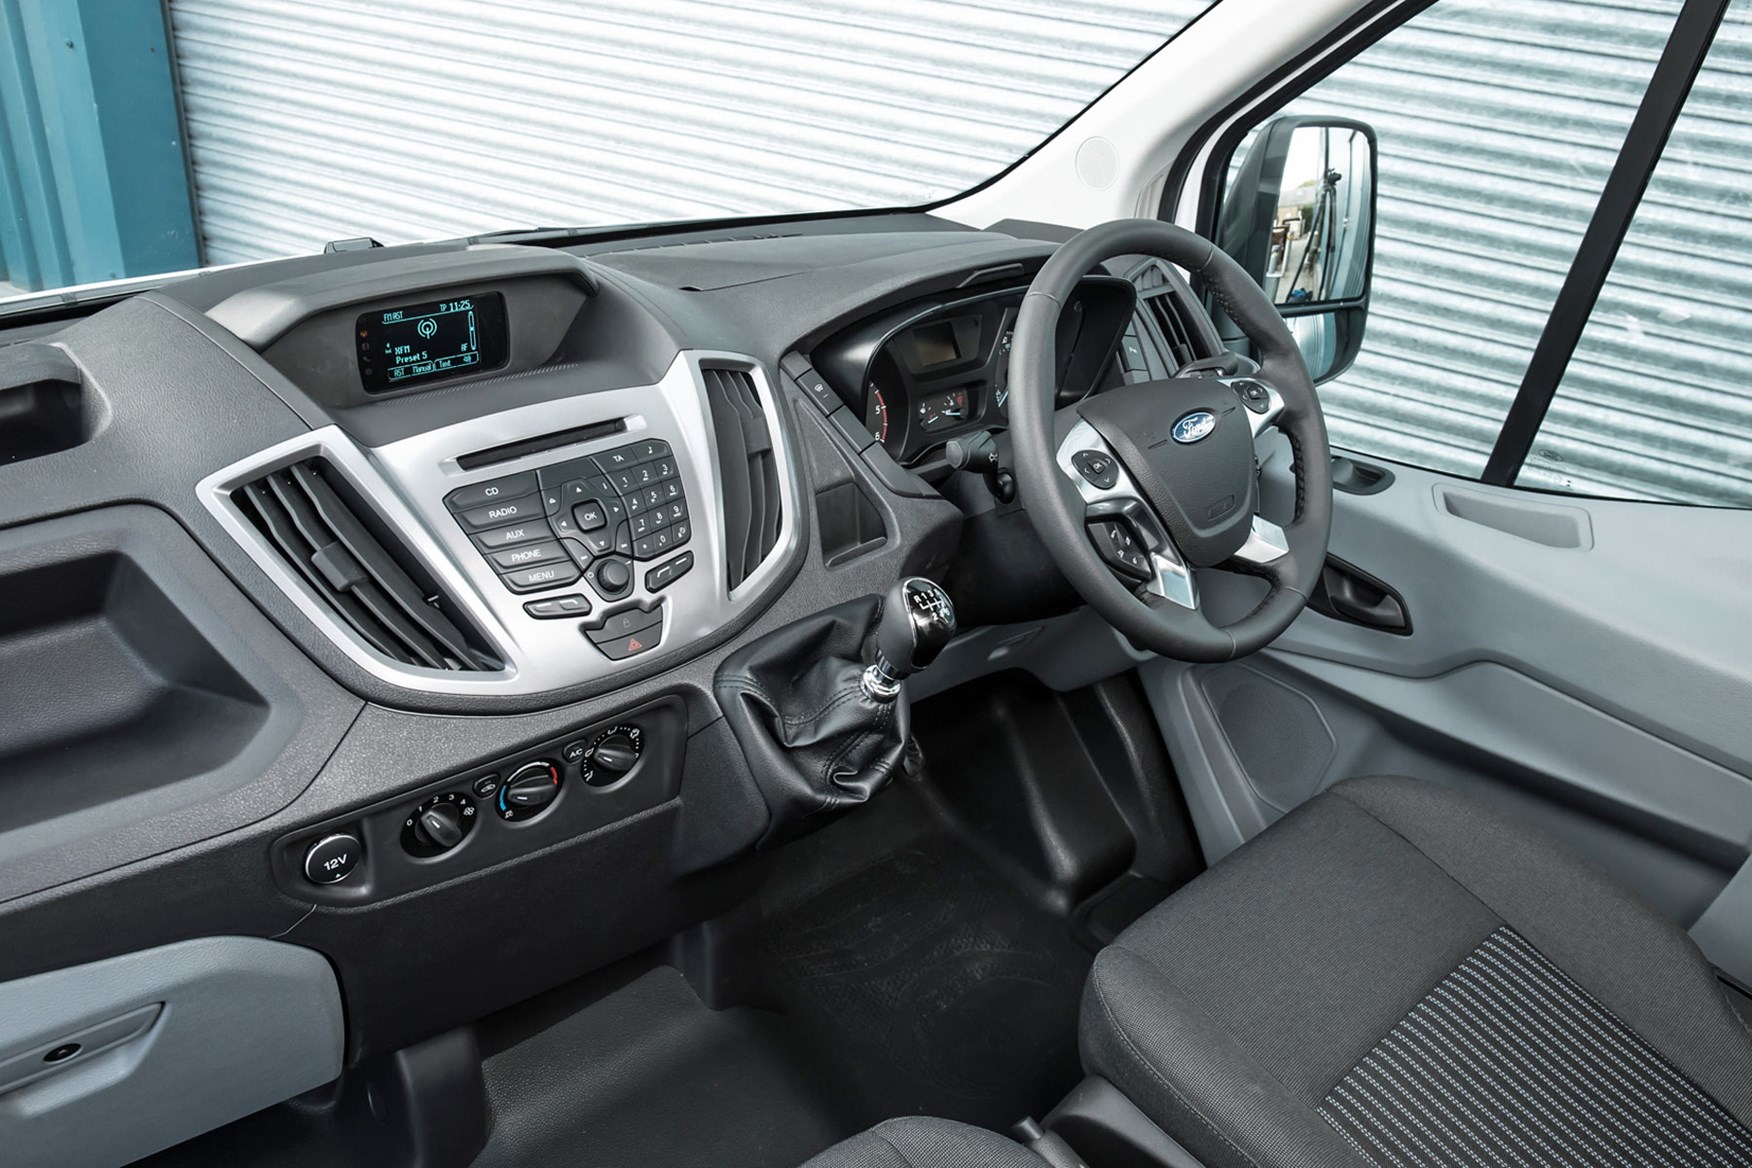 Ford Transit (2014-on) cab interior